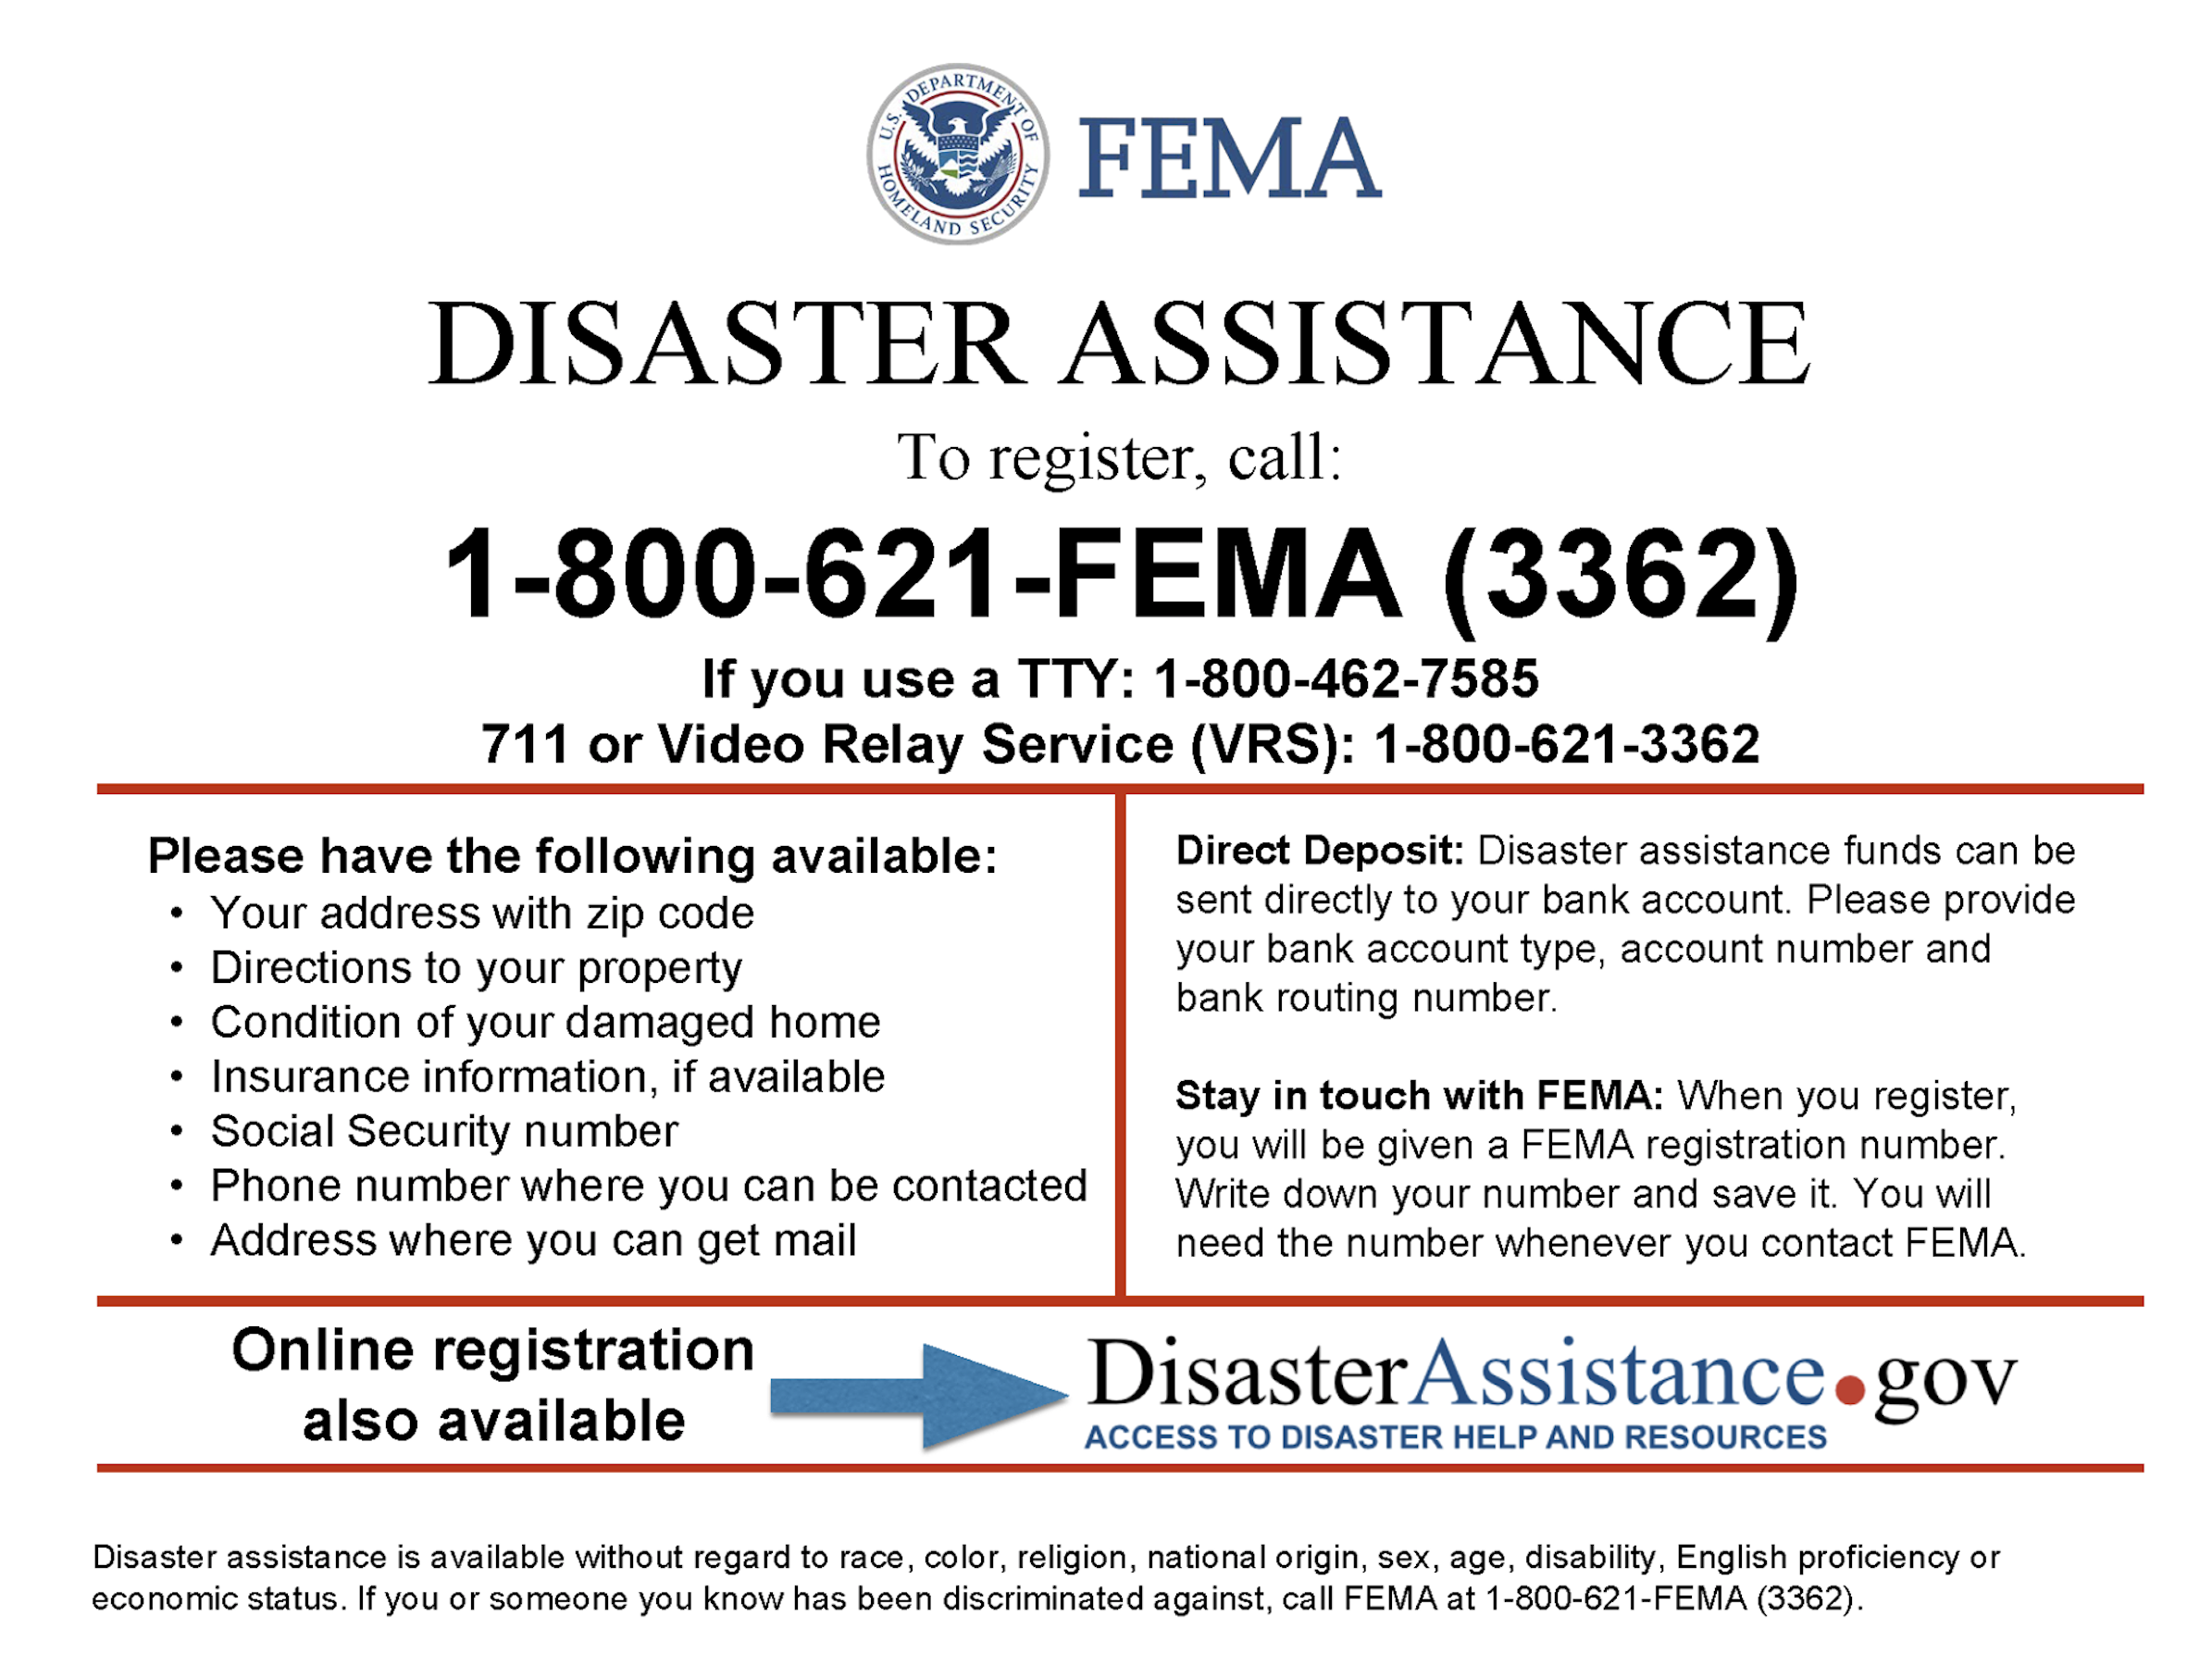 FEMA information